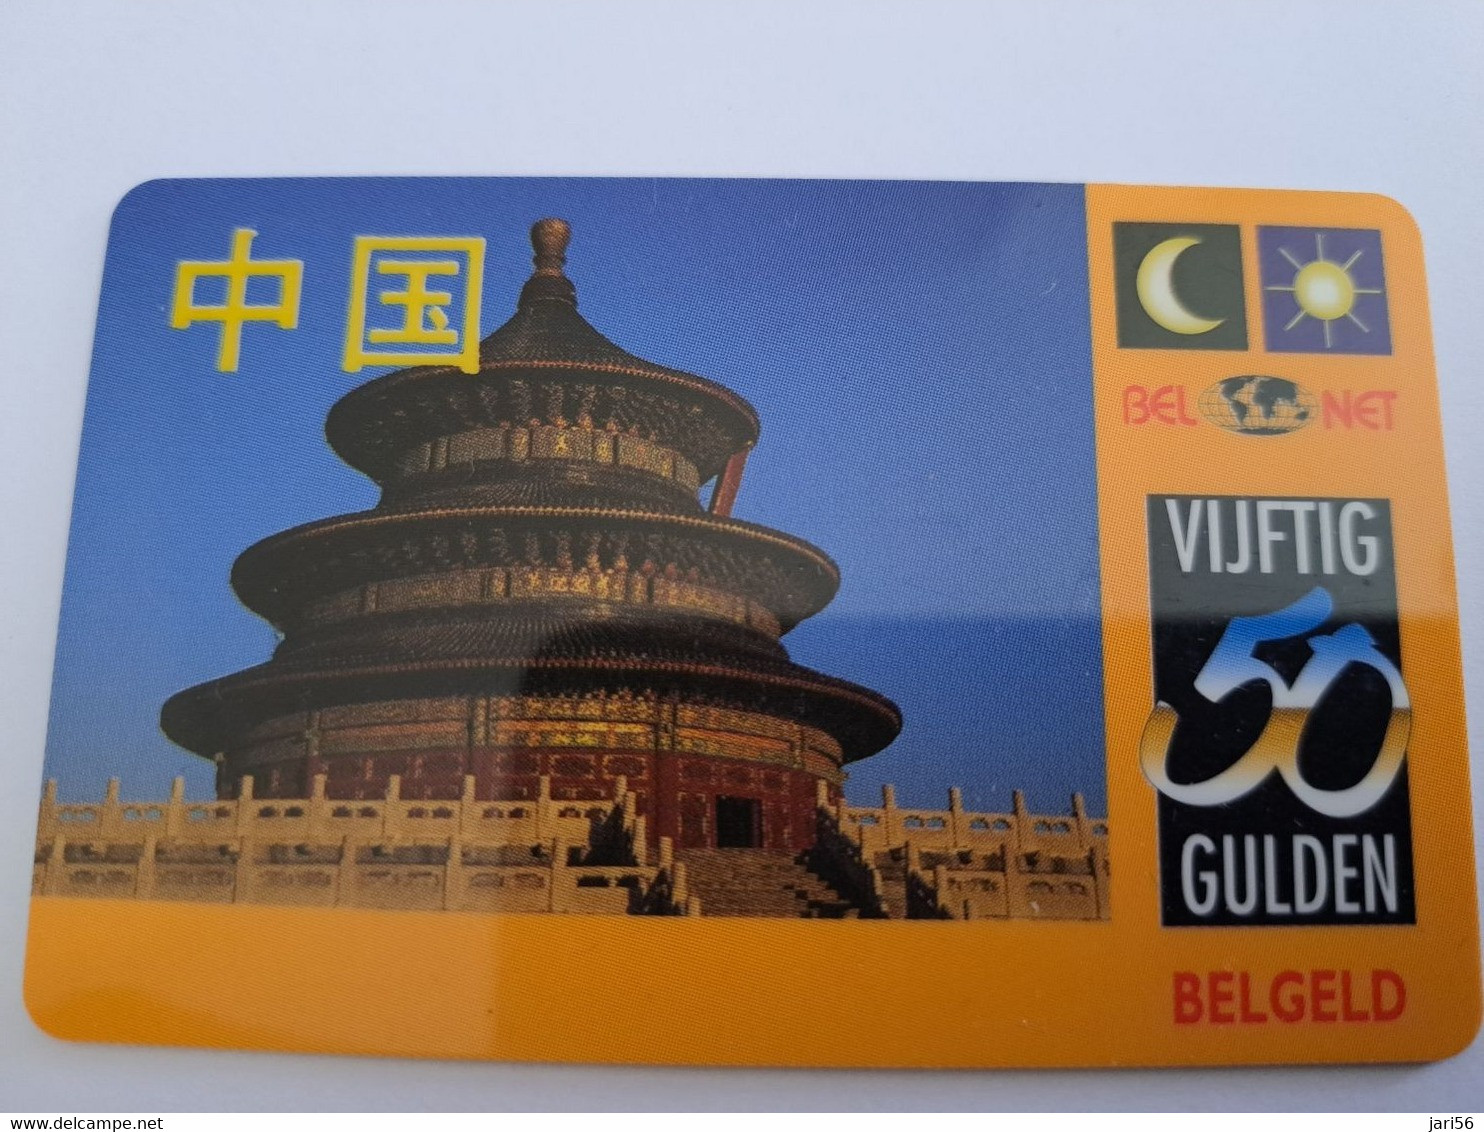 NETHERLANDS   FL 50,- COUNTRY  CHINA    /BEL NET  / THICK CARD  / OLDER CARD    PREPAID  Nice Used  ** 11172** - Cartes GSM, Prépayées Et Recharges